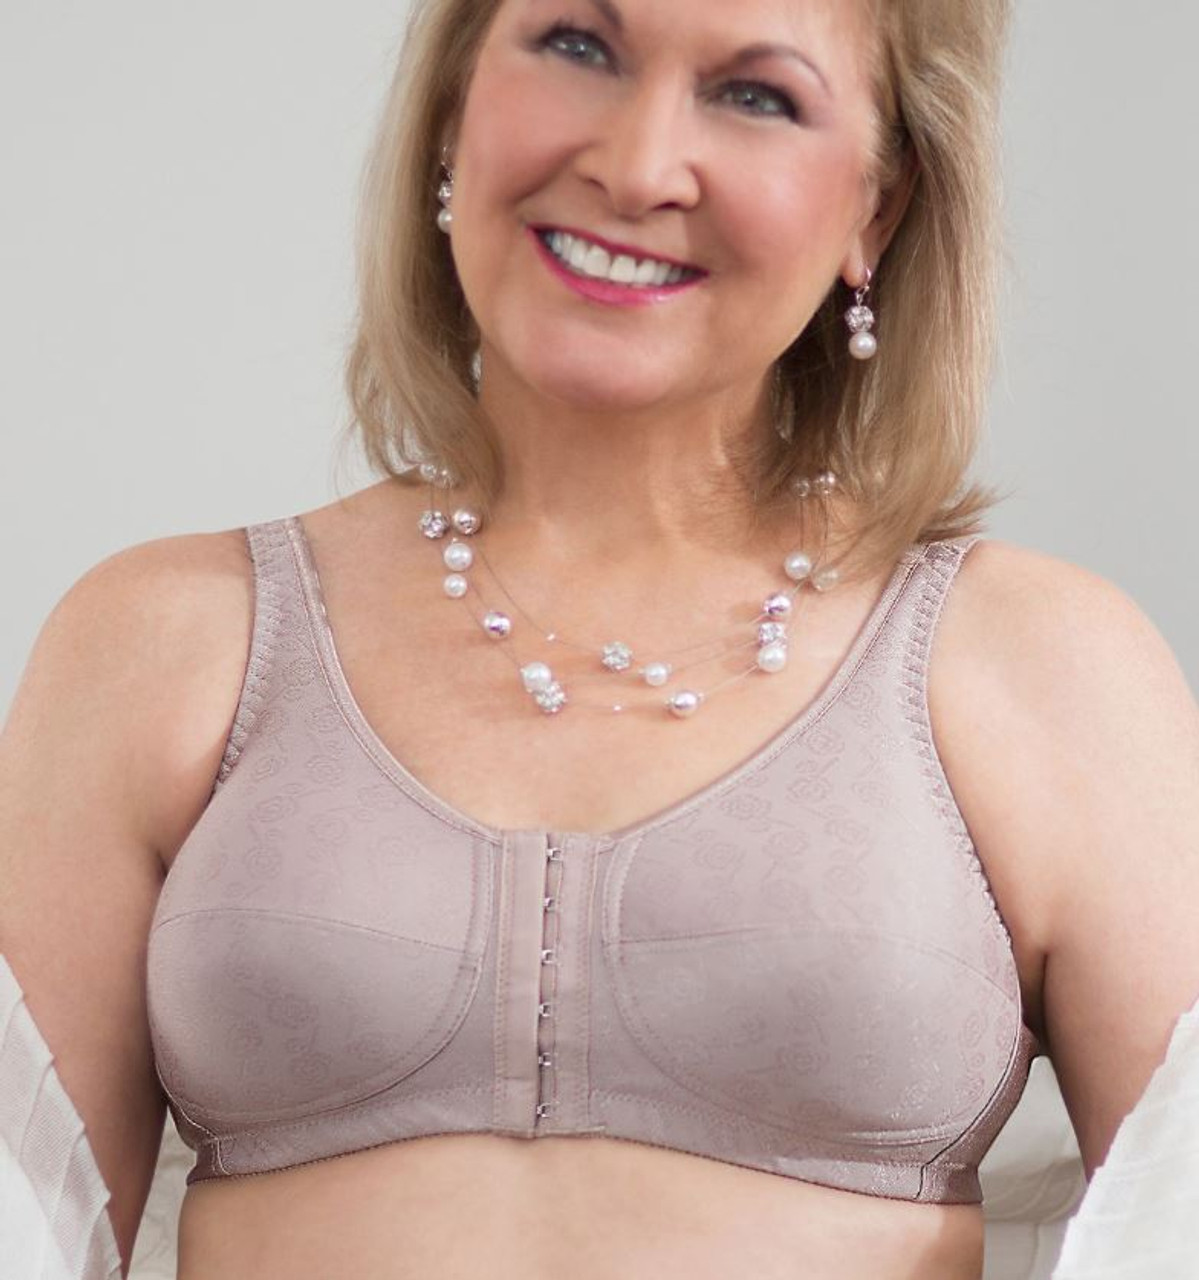 American Breast Care Mastectomy Bra Massage Size 38DD Black at